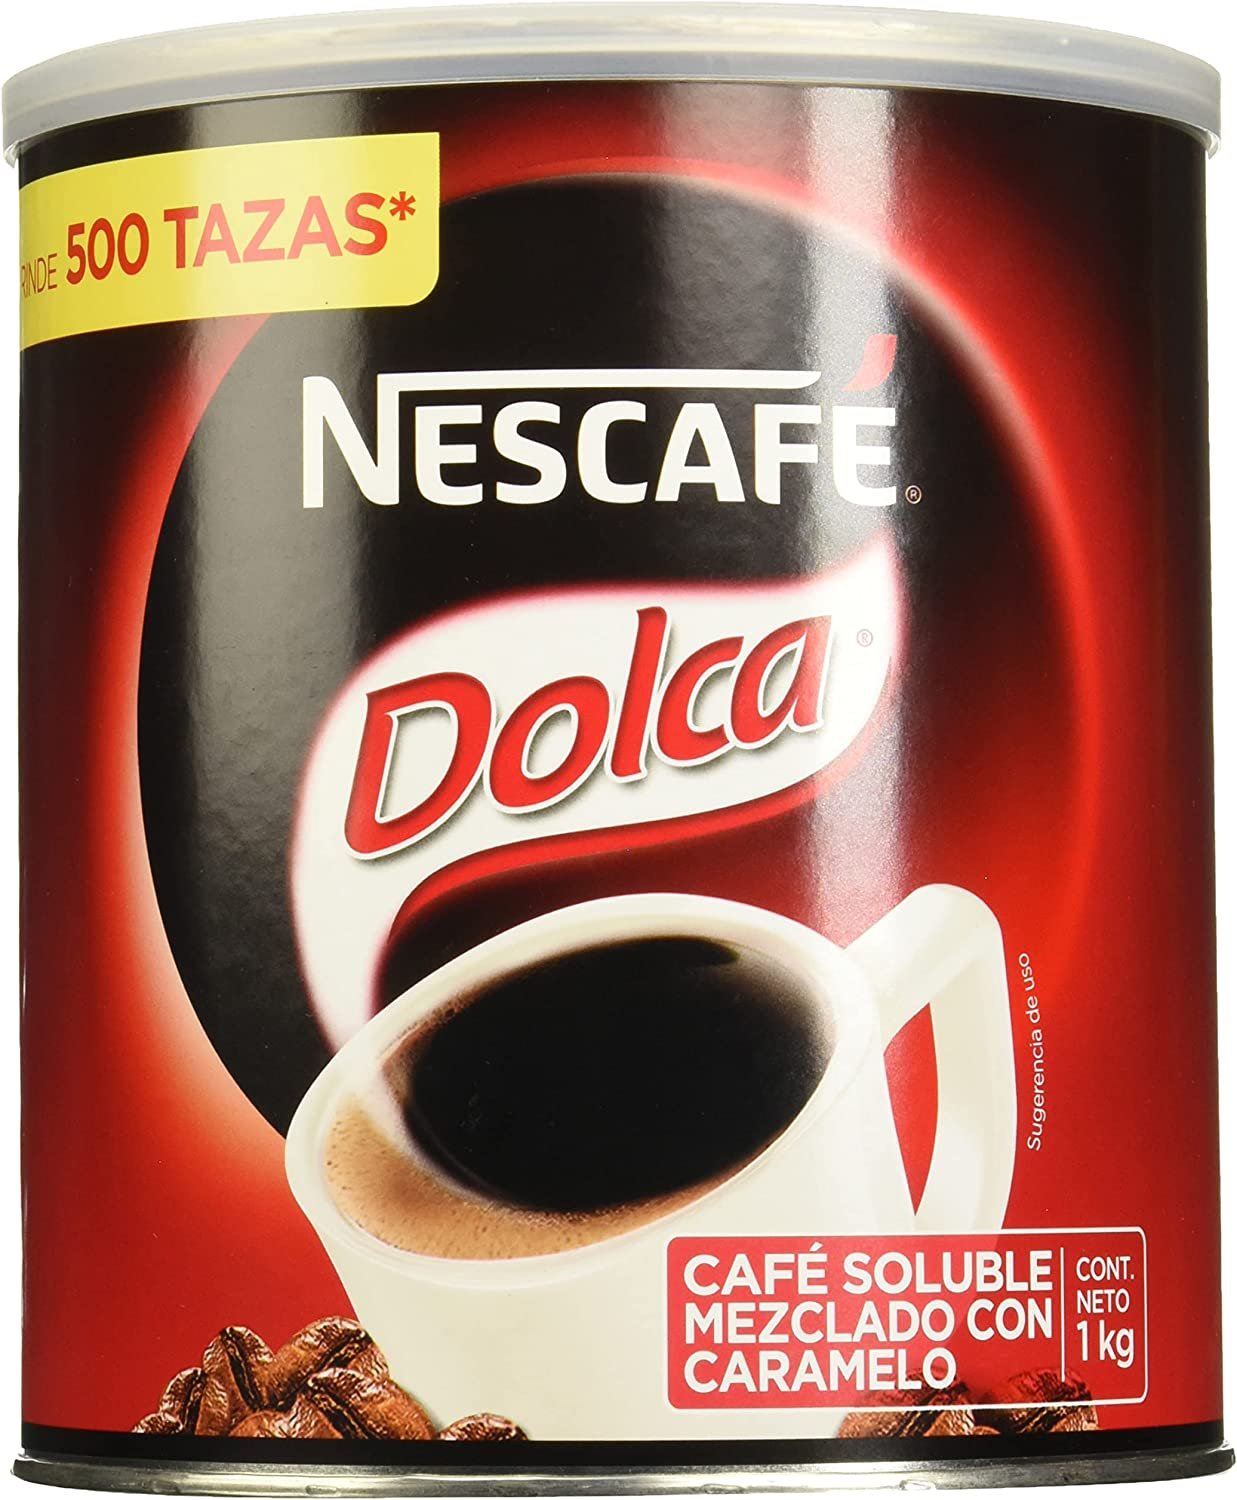 Café soluble NESCAFE 25g - ElAoula